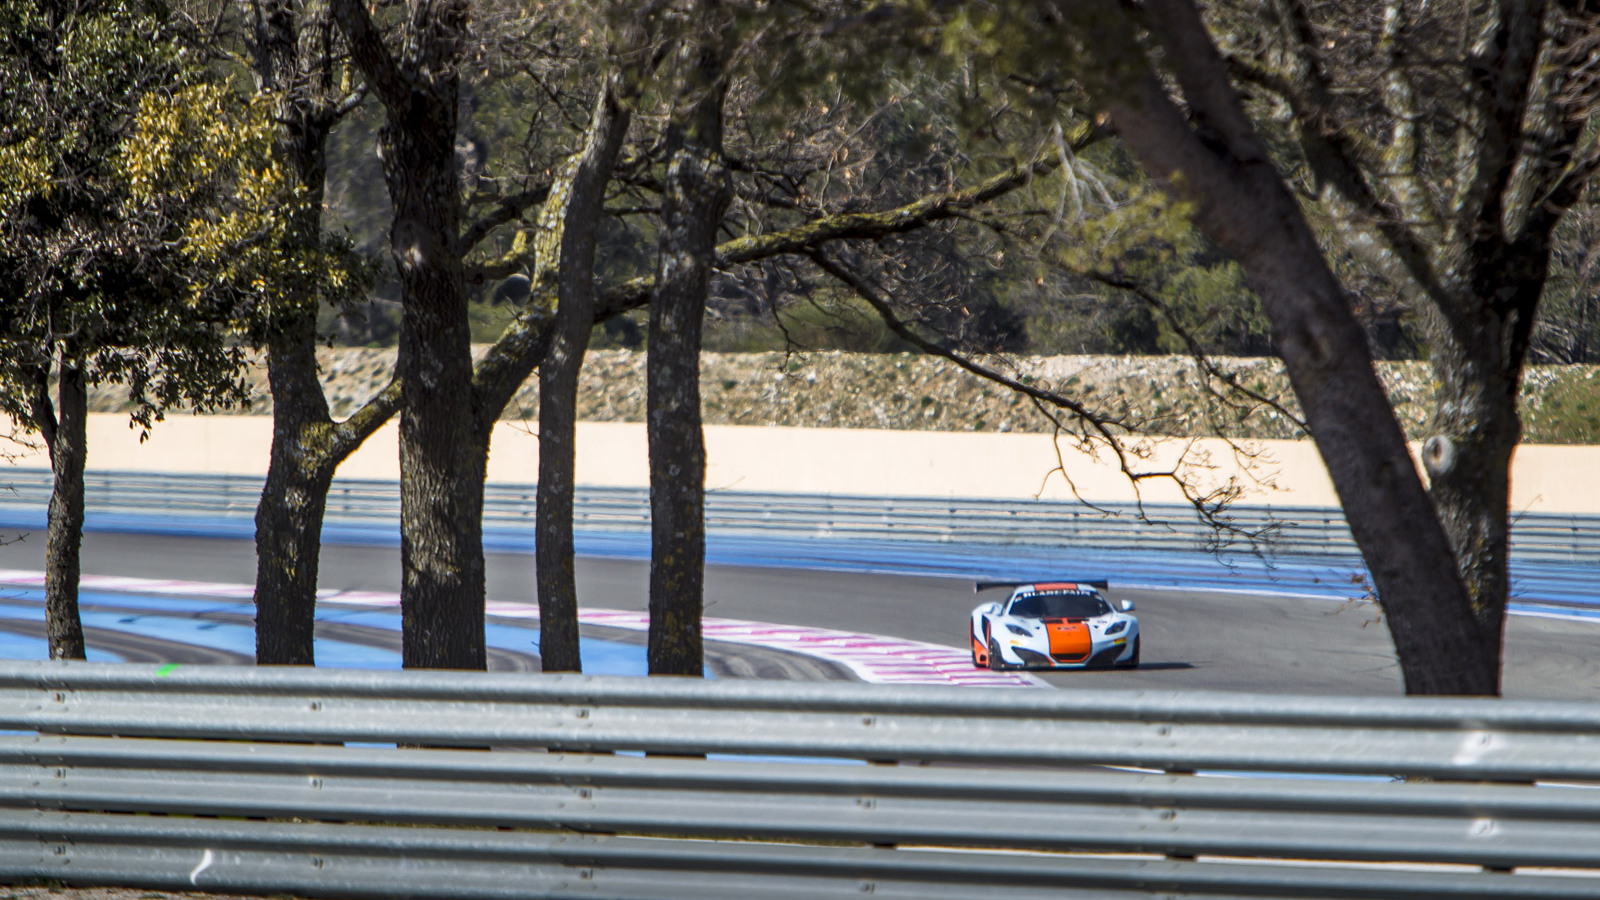 2013 McLaren 12C GT3 race car